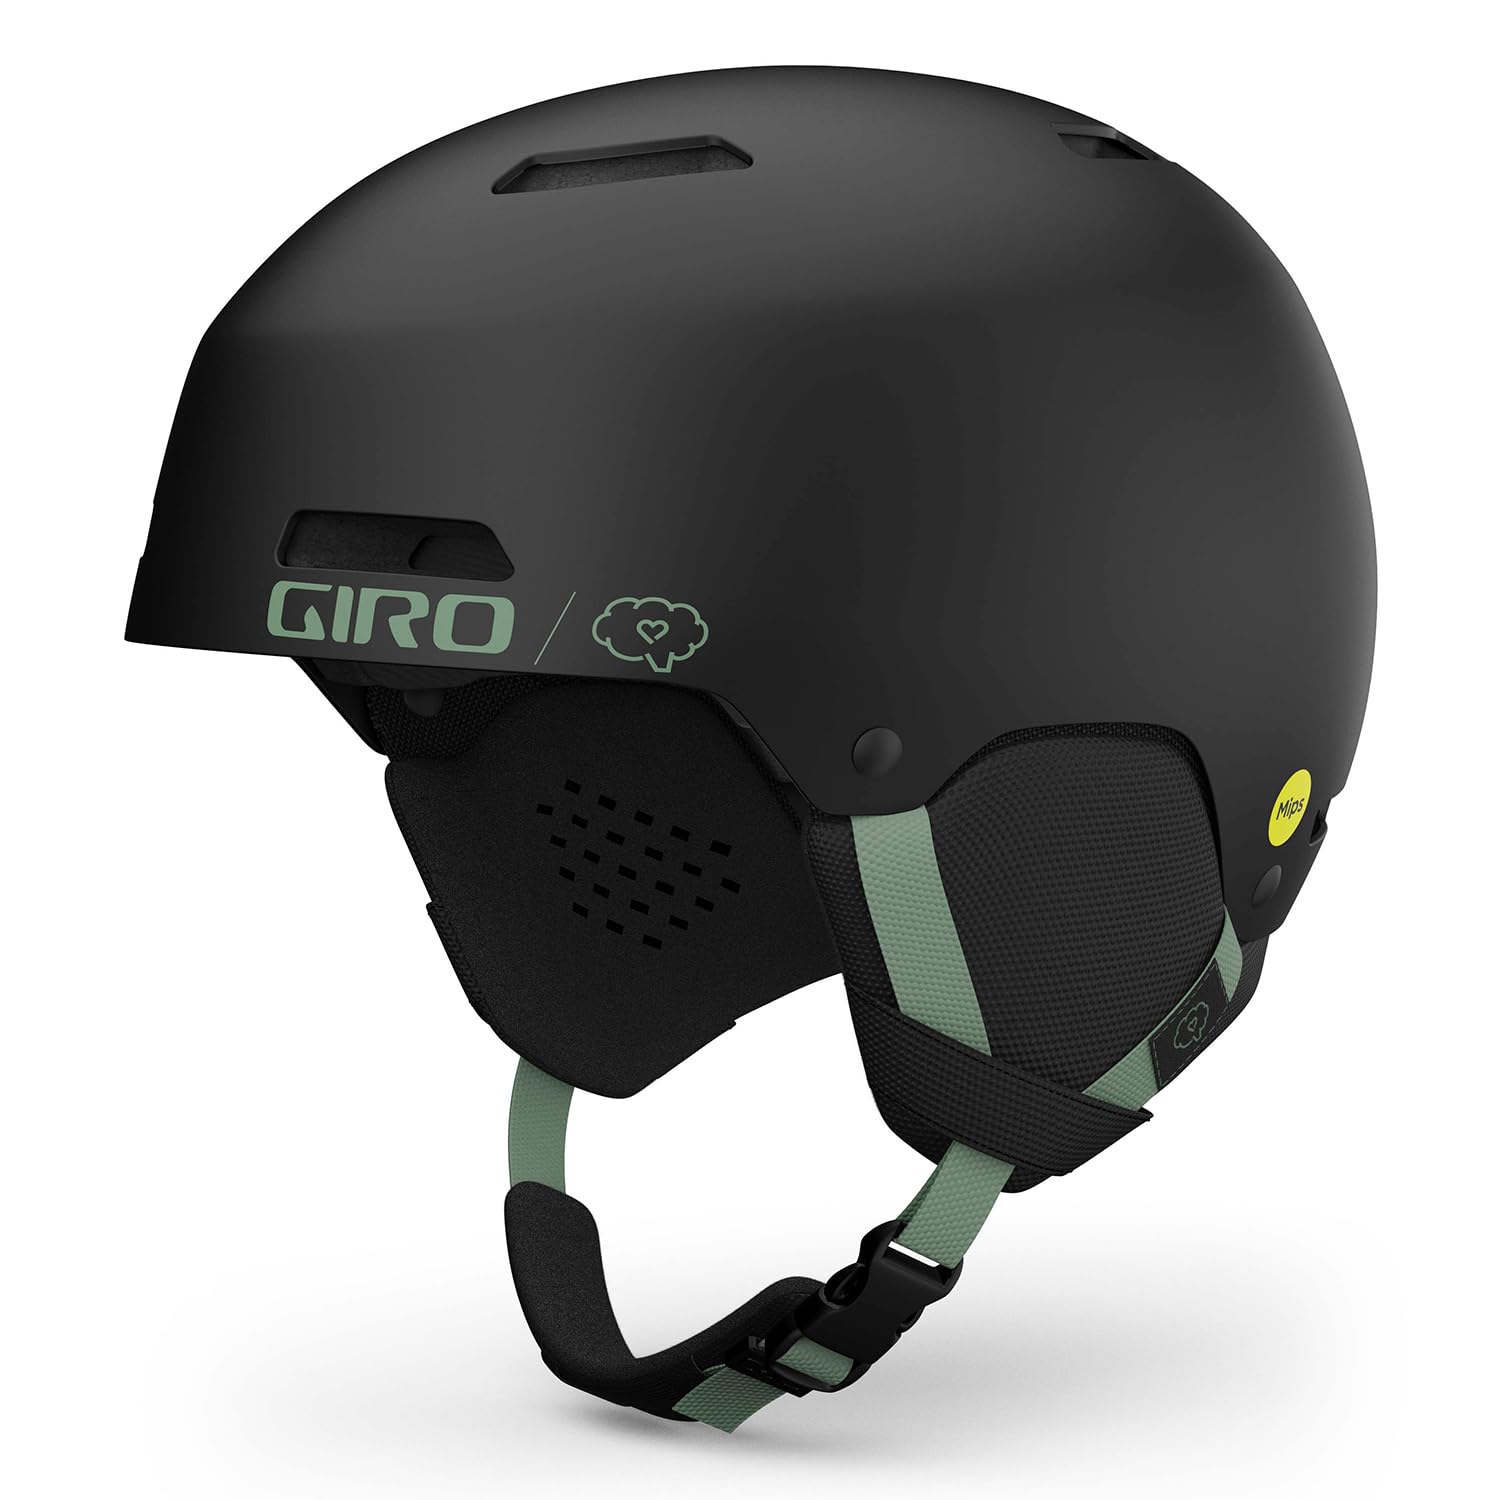 Giro Ledge FS MIPS Ski Helmet - Snowboard Helmet for Men Women Youth - Save A Brain - M 55.5-59 cm並行輸入品